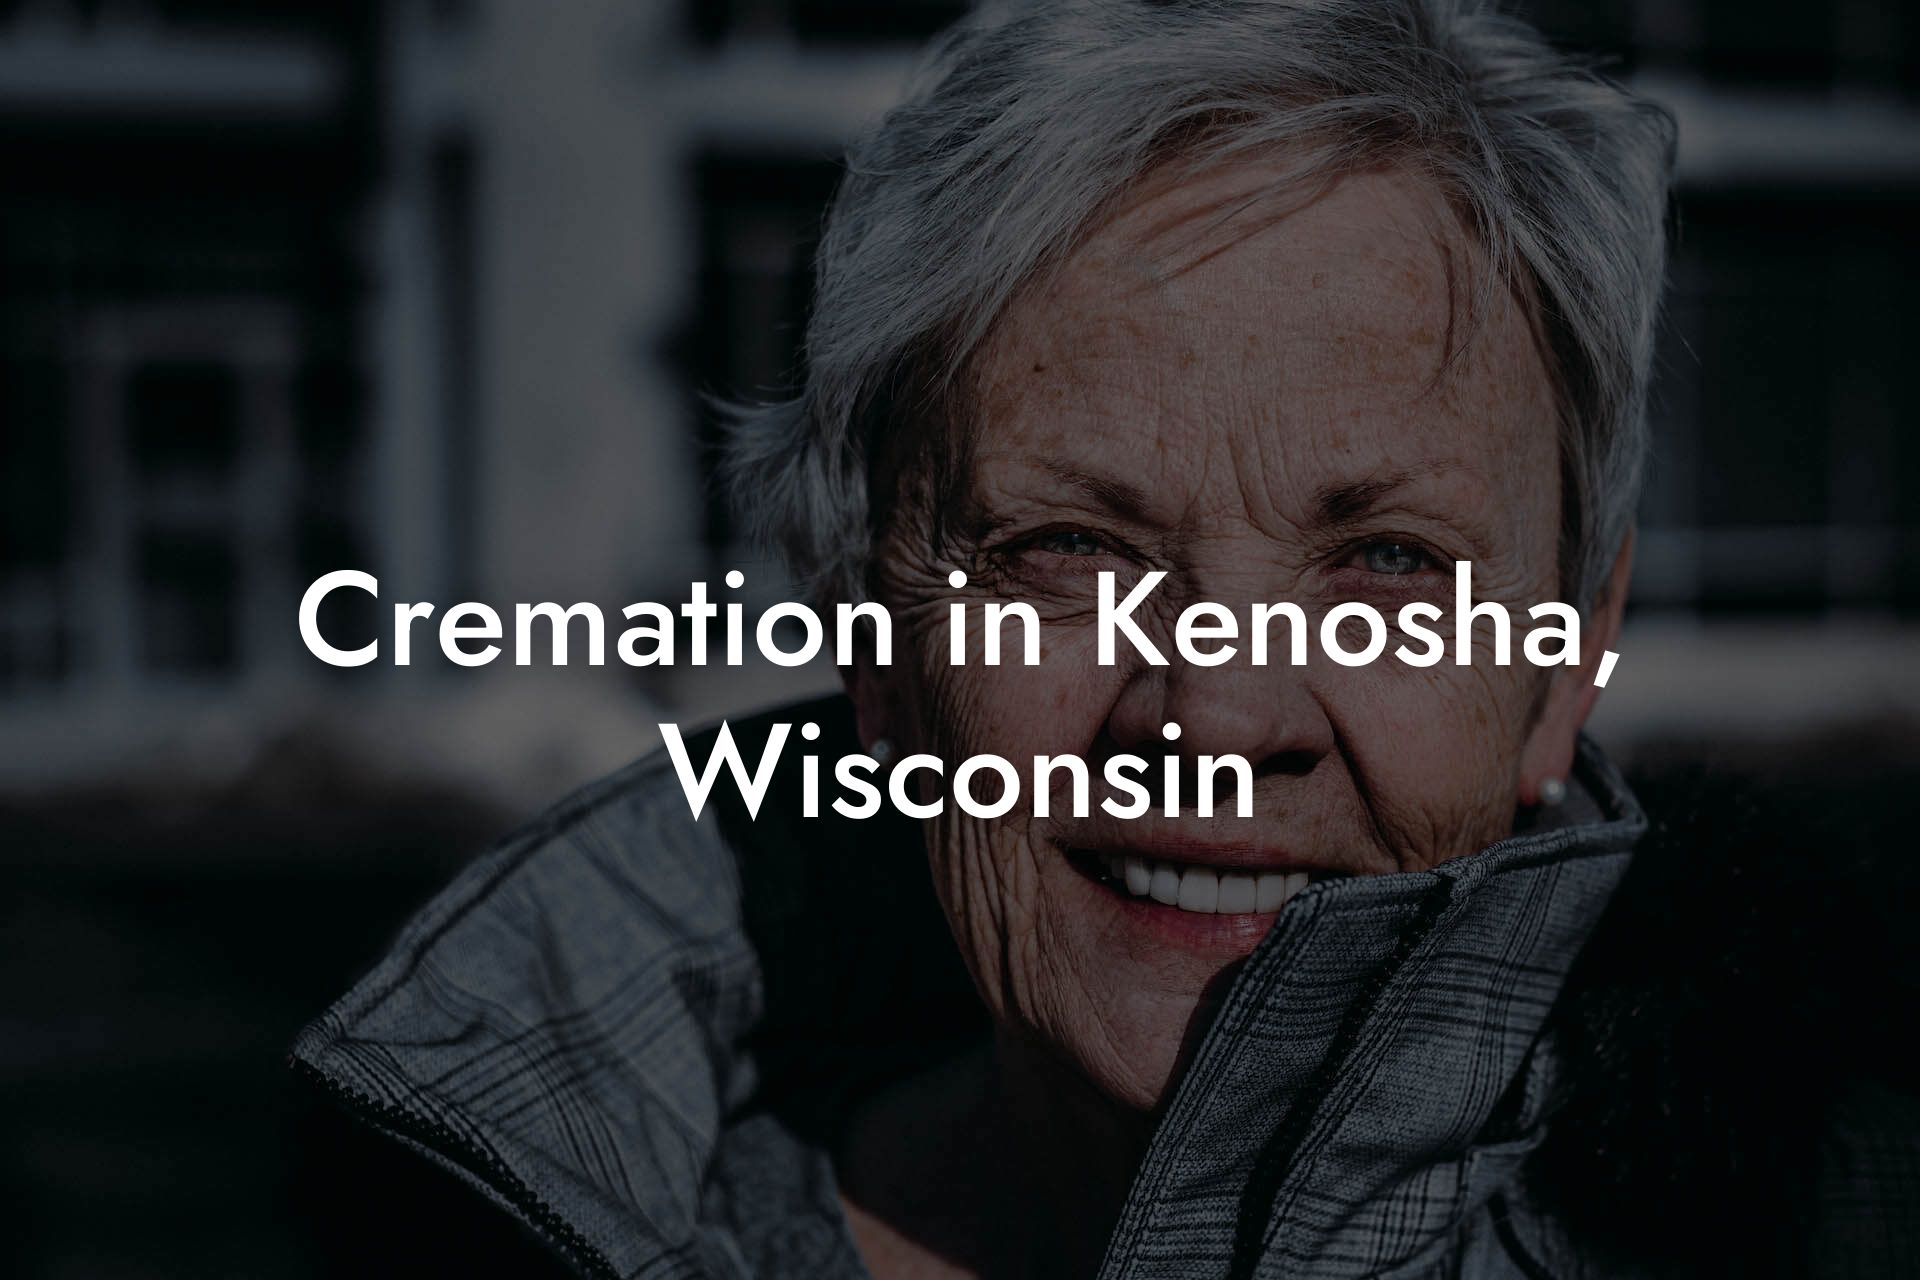 Cremation in Kenosha, Wisconsin